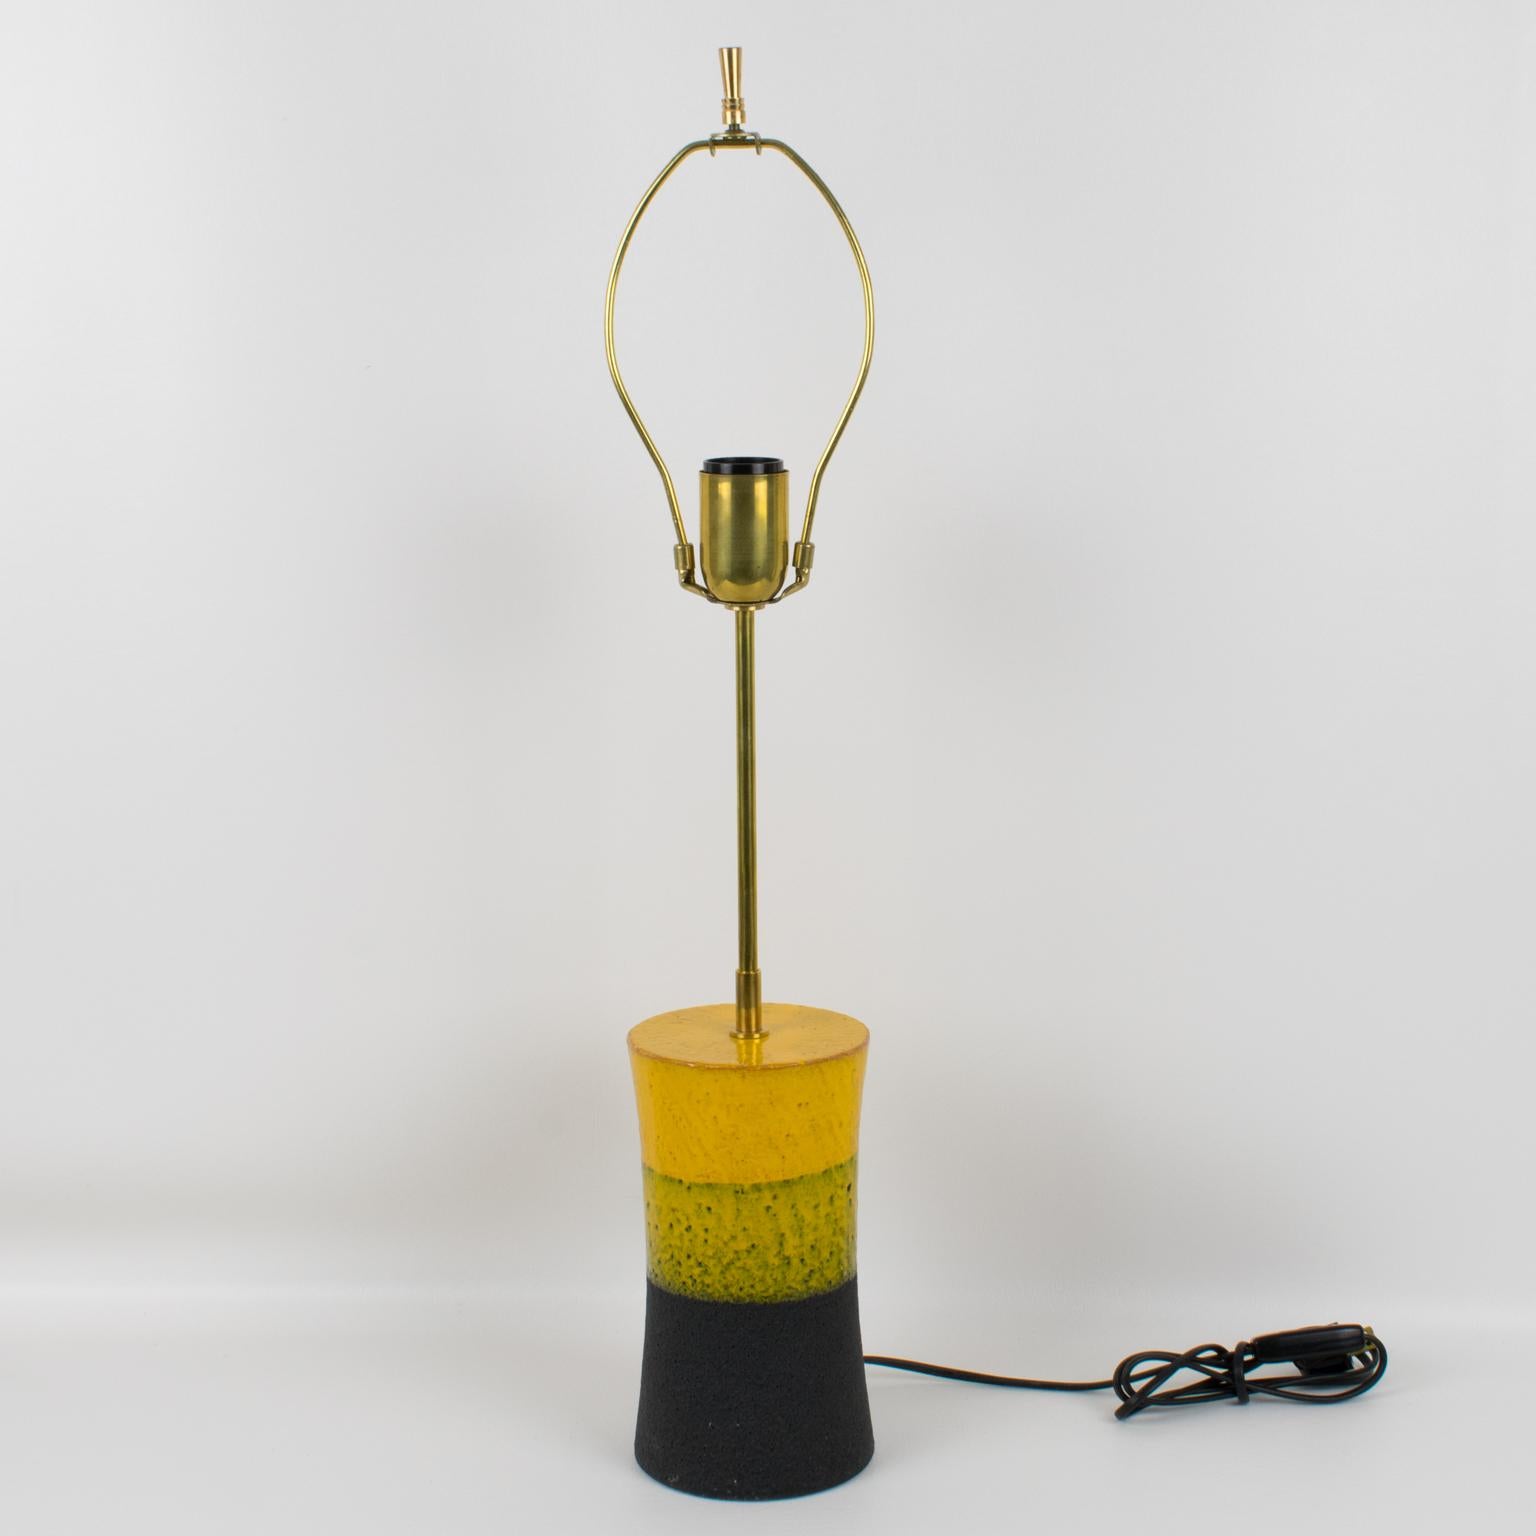 Italian Aldo Londi for Bitossi Italy Mondrian Design Ceramic Table Lamp, 1960s For Sale